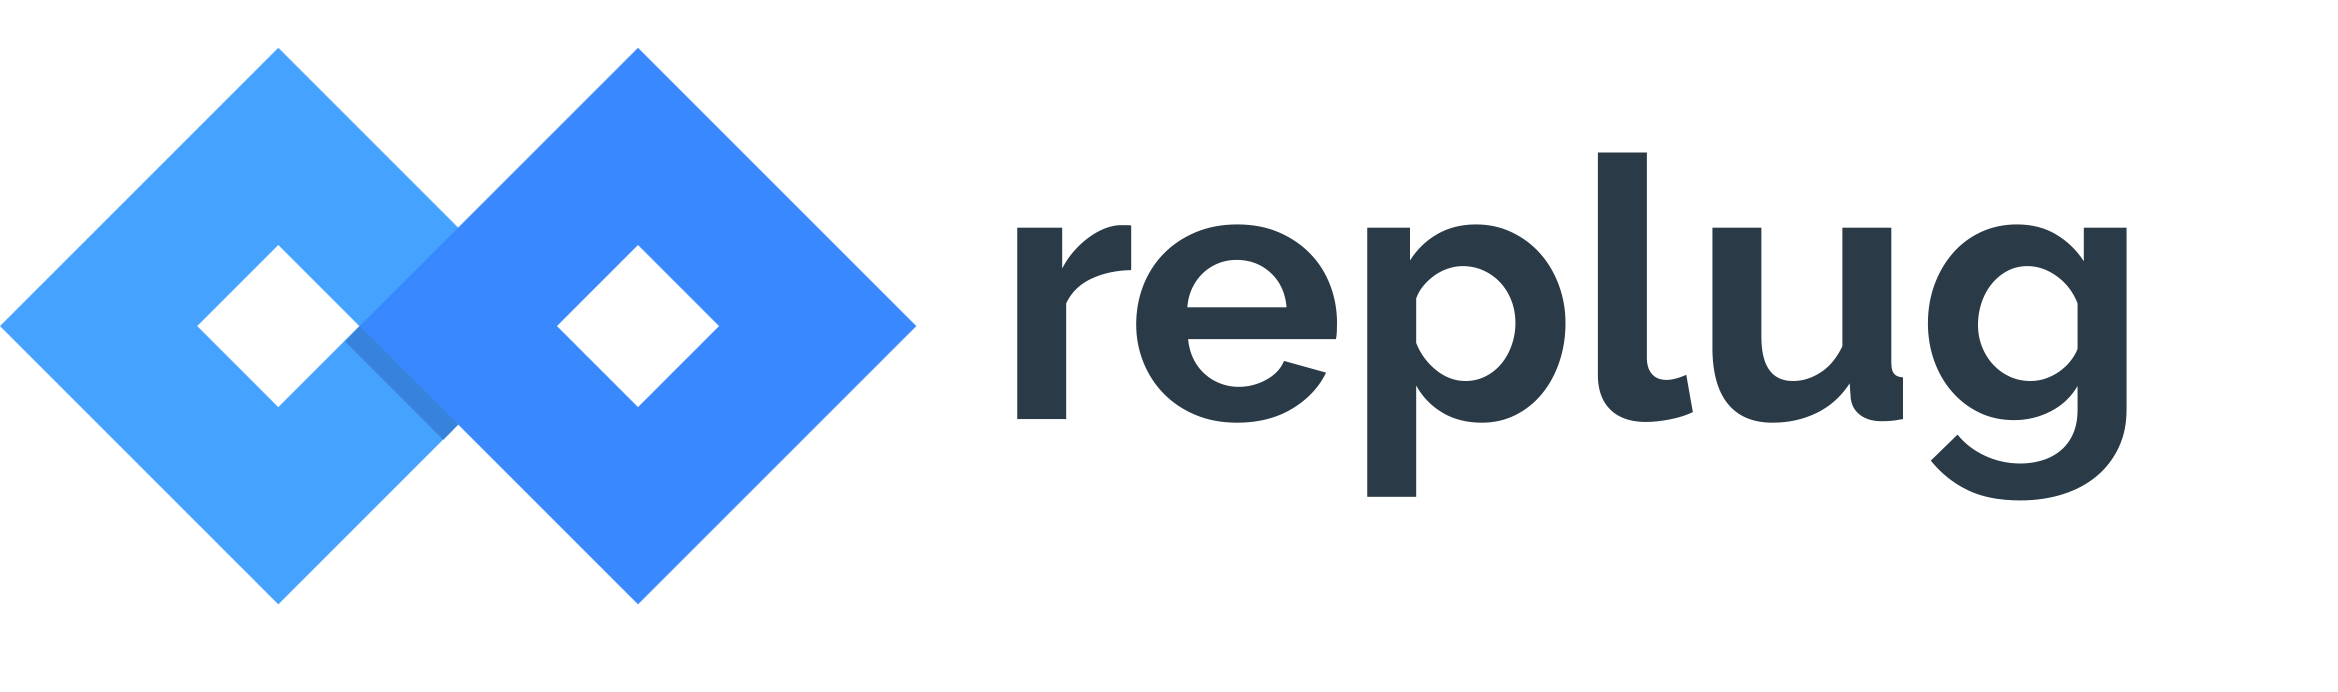 Replug Logo